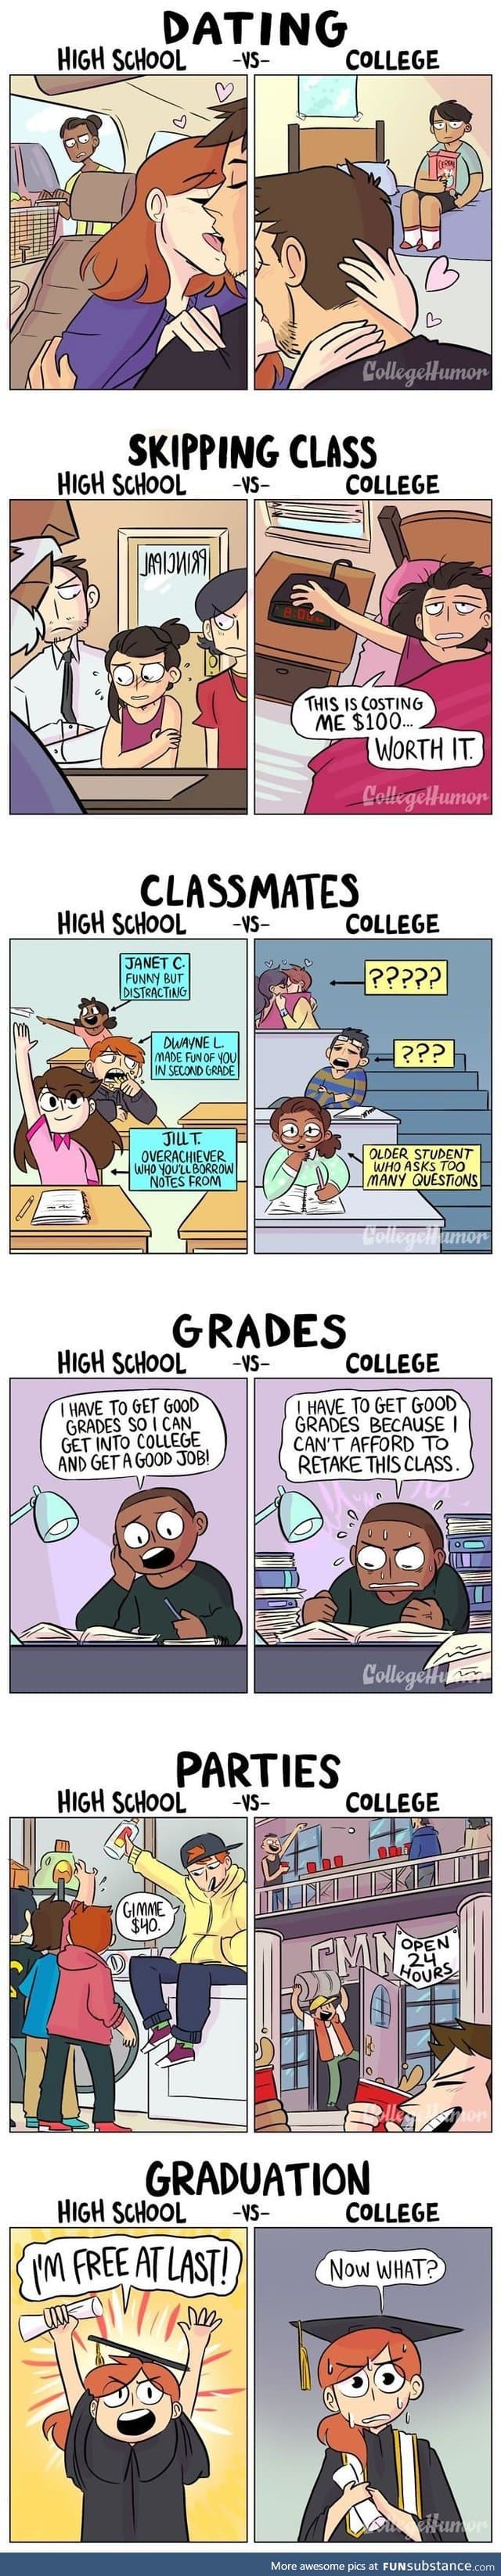 High School vs College